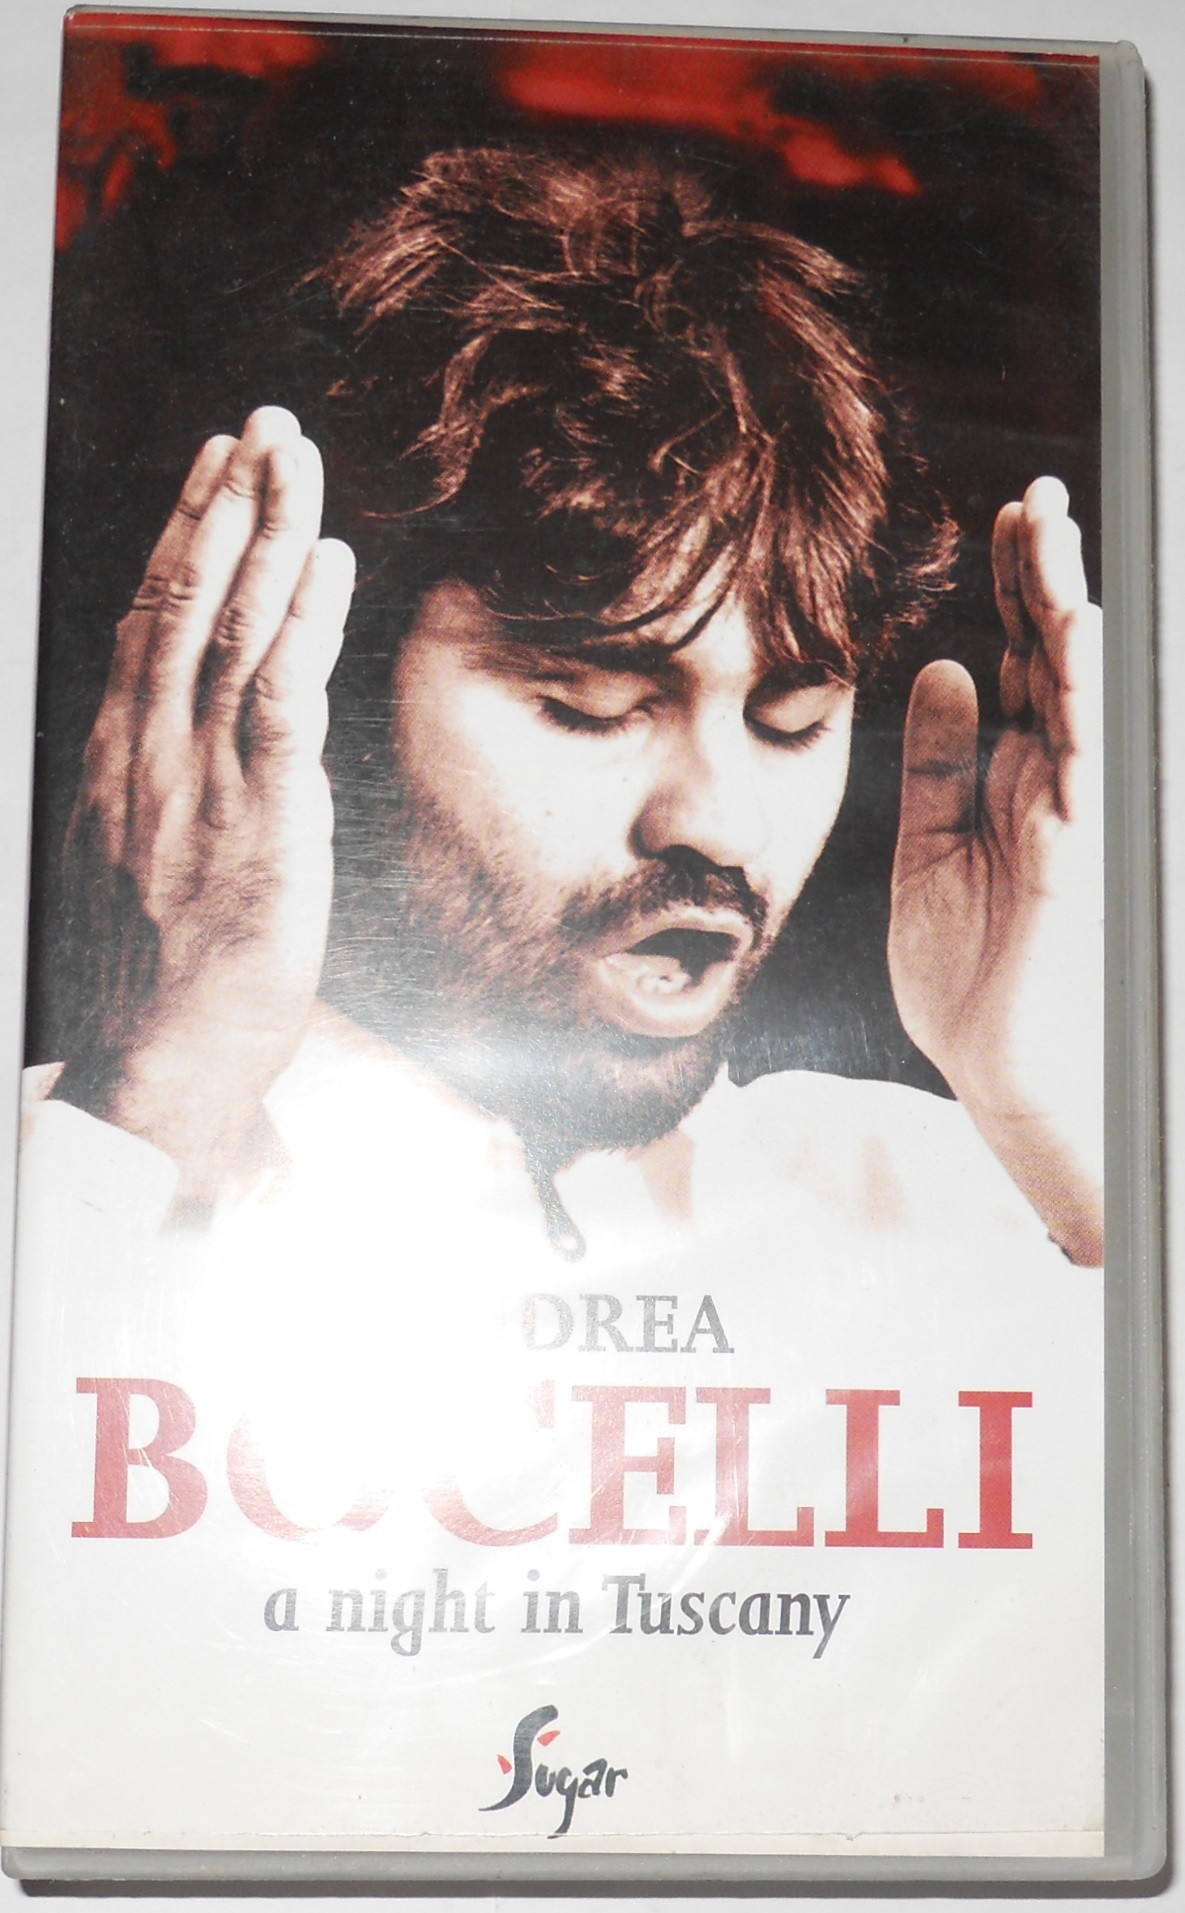 Andrea Bocelli - A NIGHT IN TUSCANY 